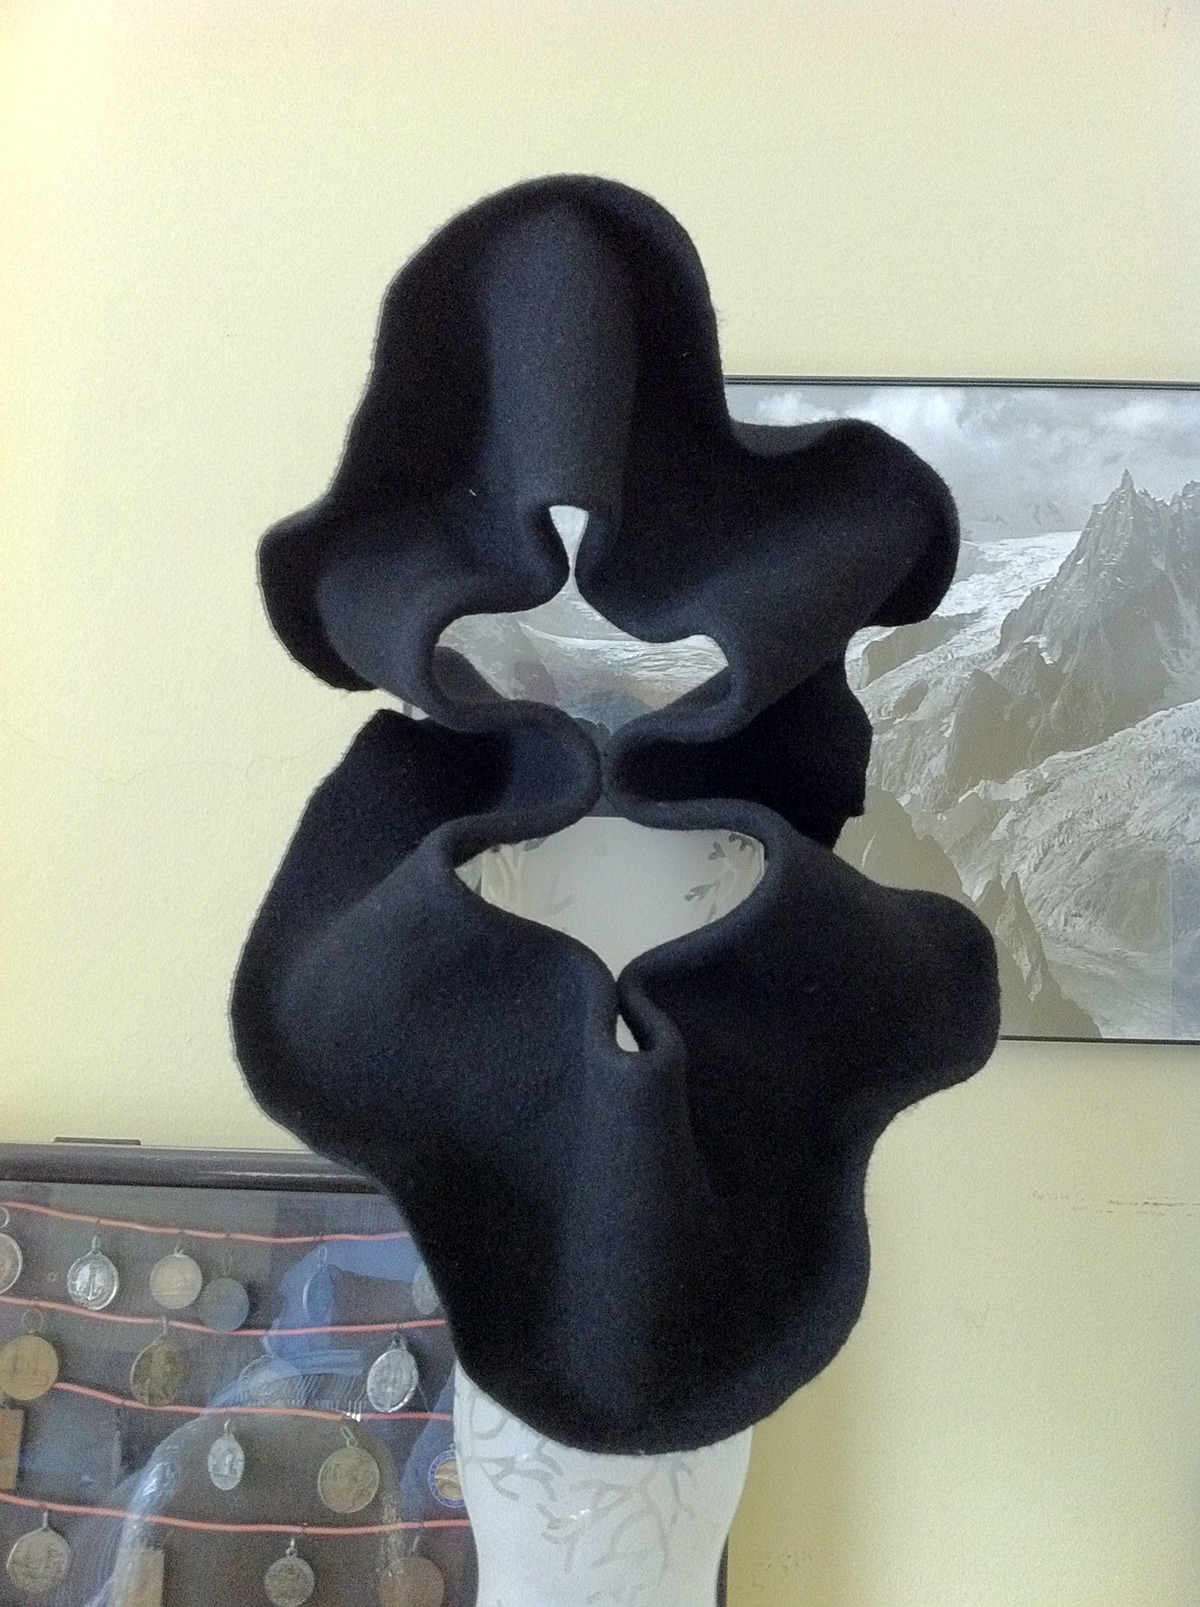 felt black millinery hat fabric fabric manipulation sculpture flower wave